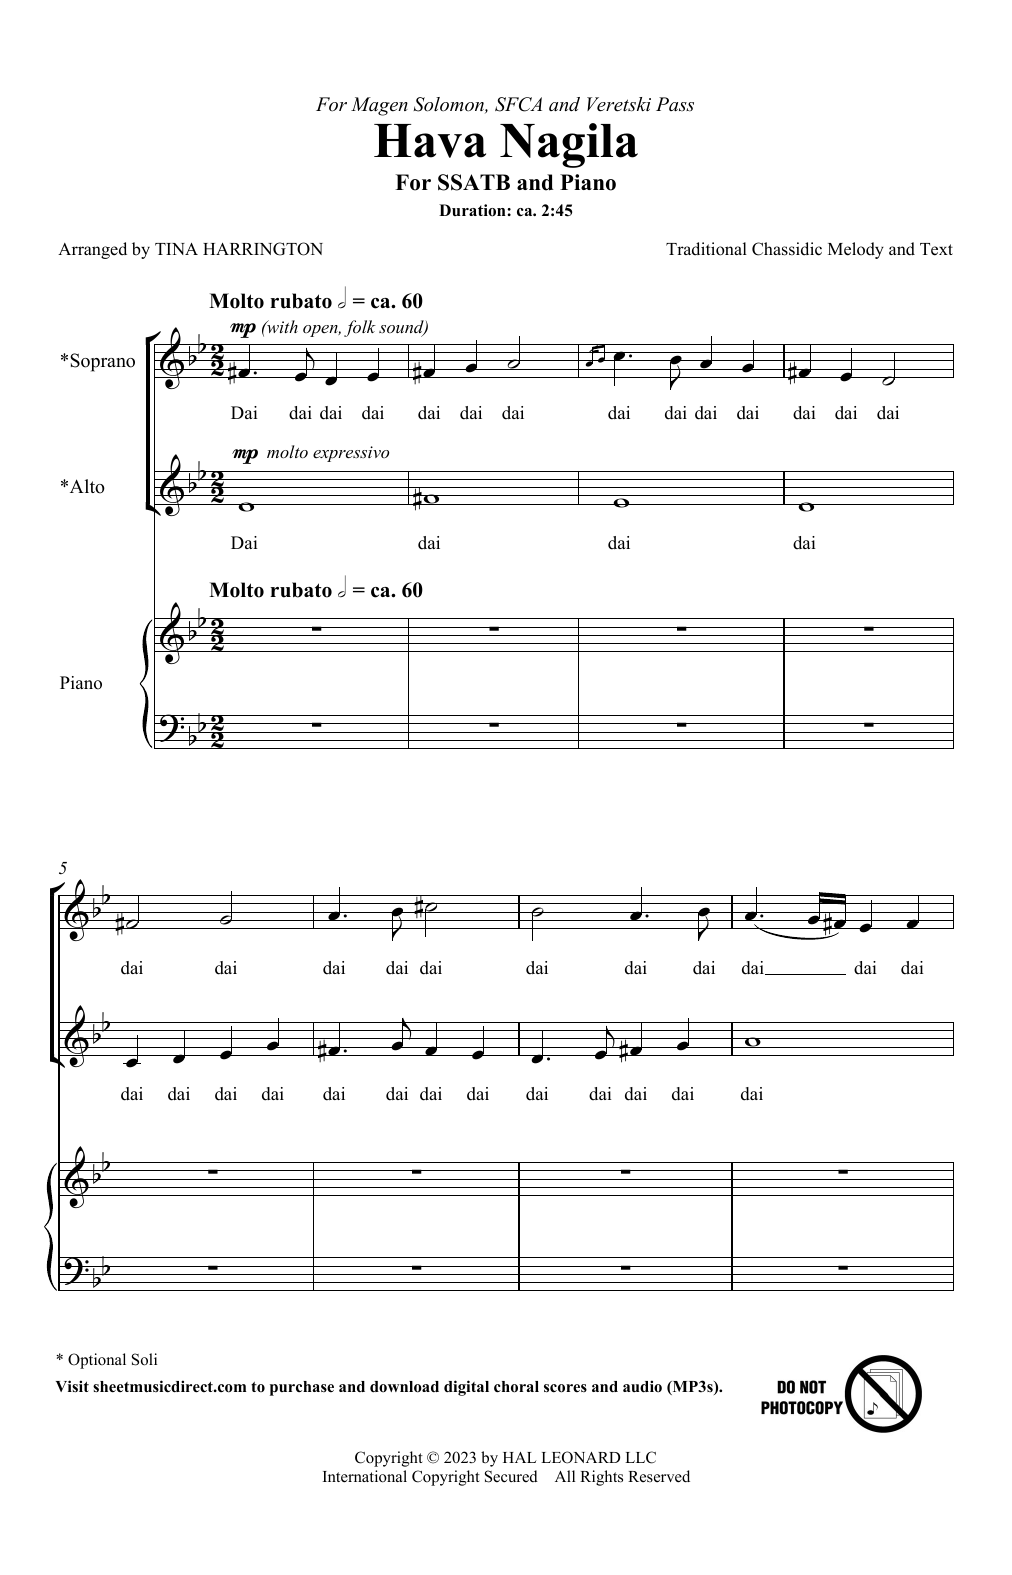 Download Tina Harrington Hava Nagila Sheet Music and learn how to play Choir PDF digital score in minutes